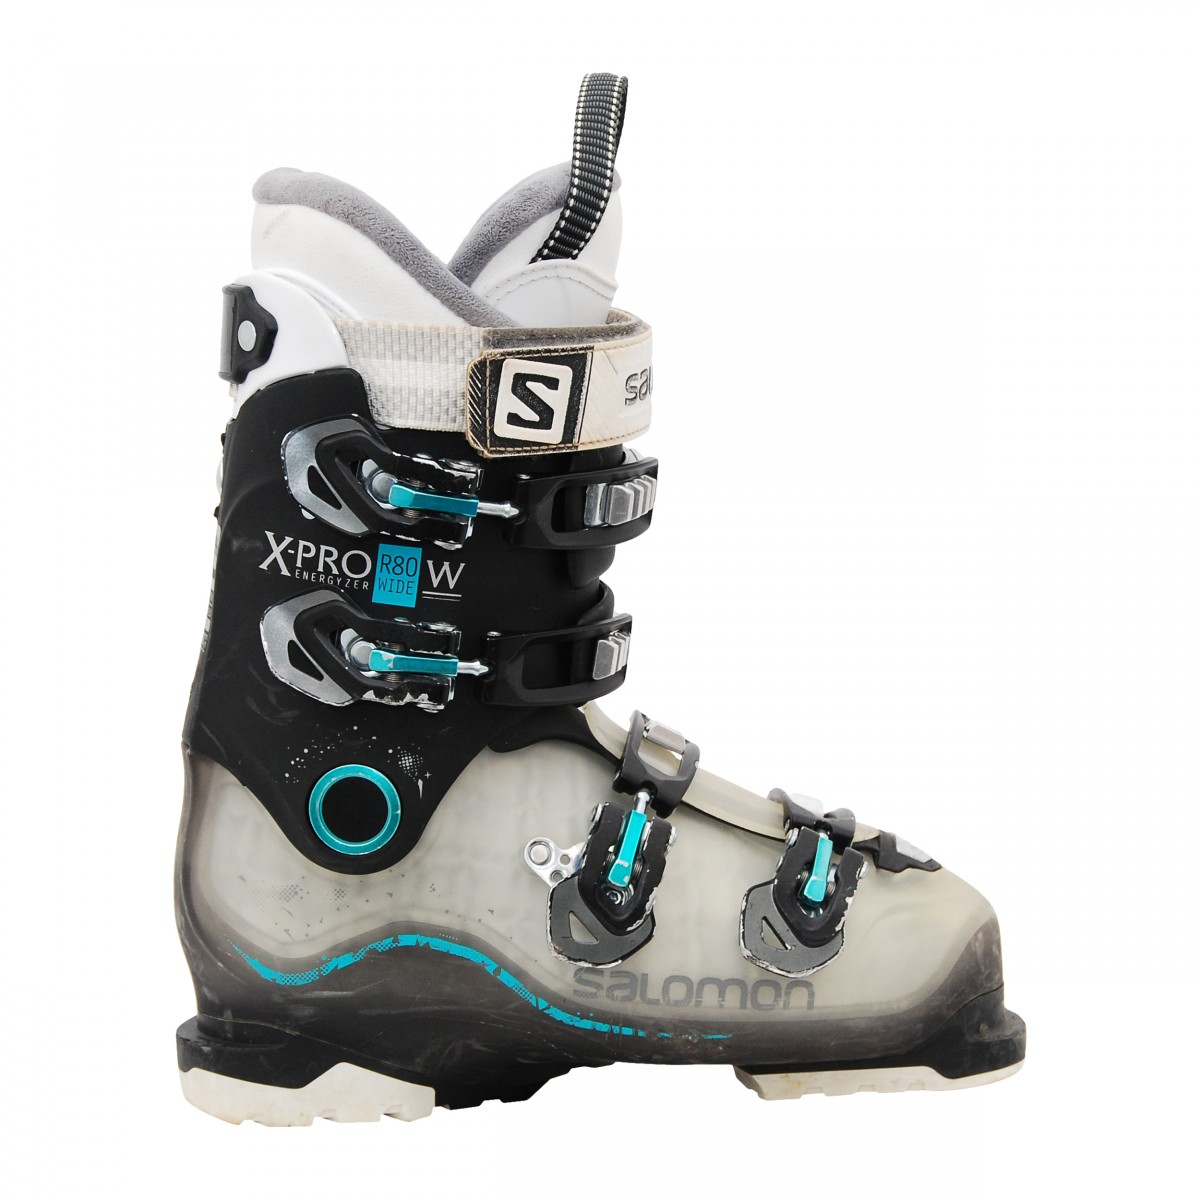 Used ski boots Salomon xpro r80w black/translucent/blue